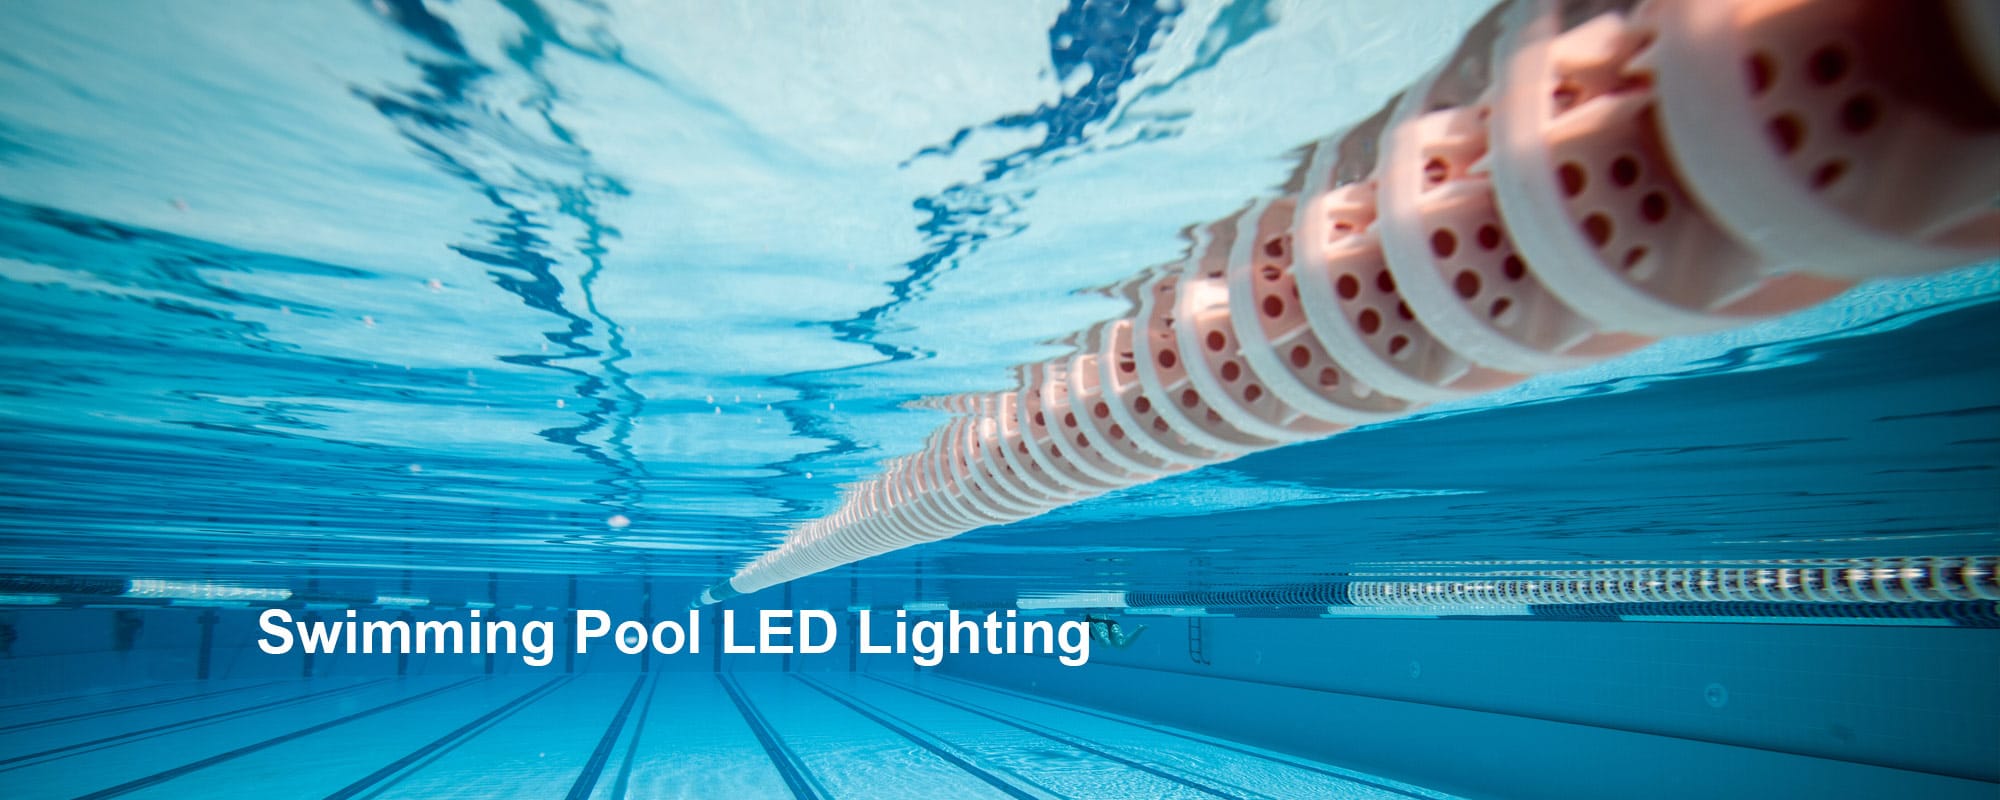 LED Swimming pool lighting